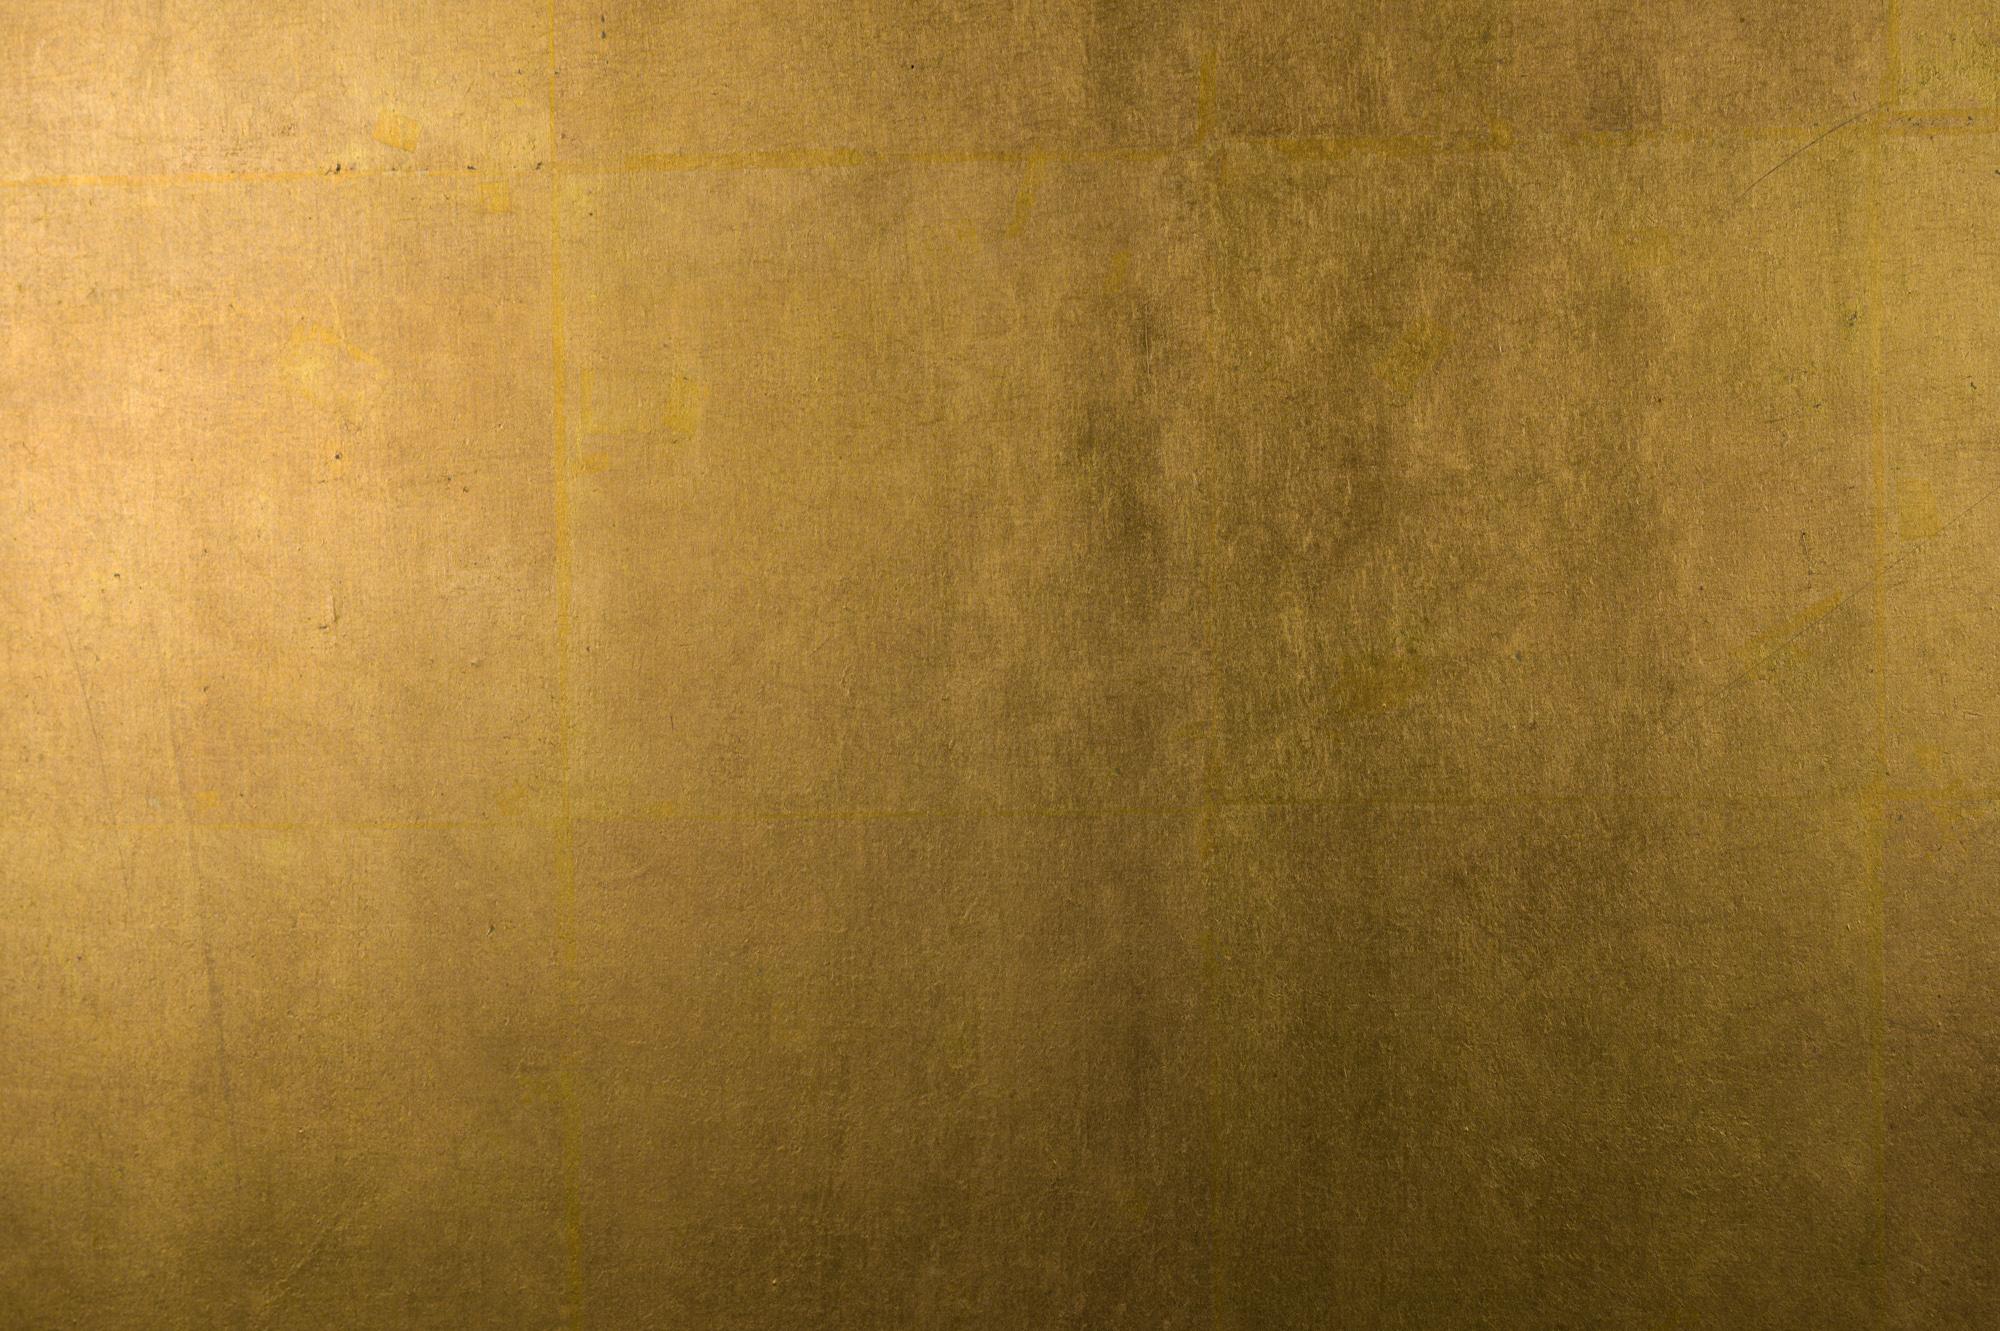 Japanese Six Panel Screen: Plain Gold Leaf, 'No Image' 3